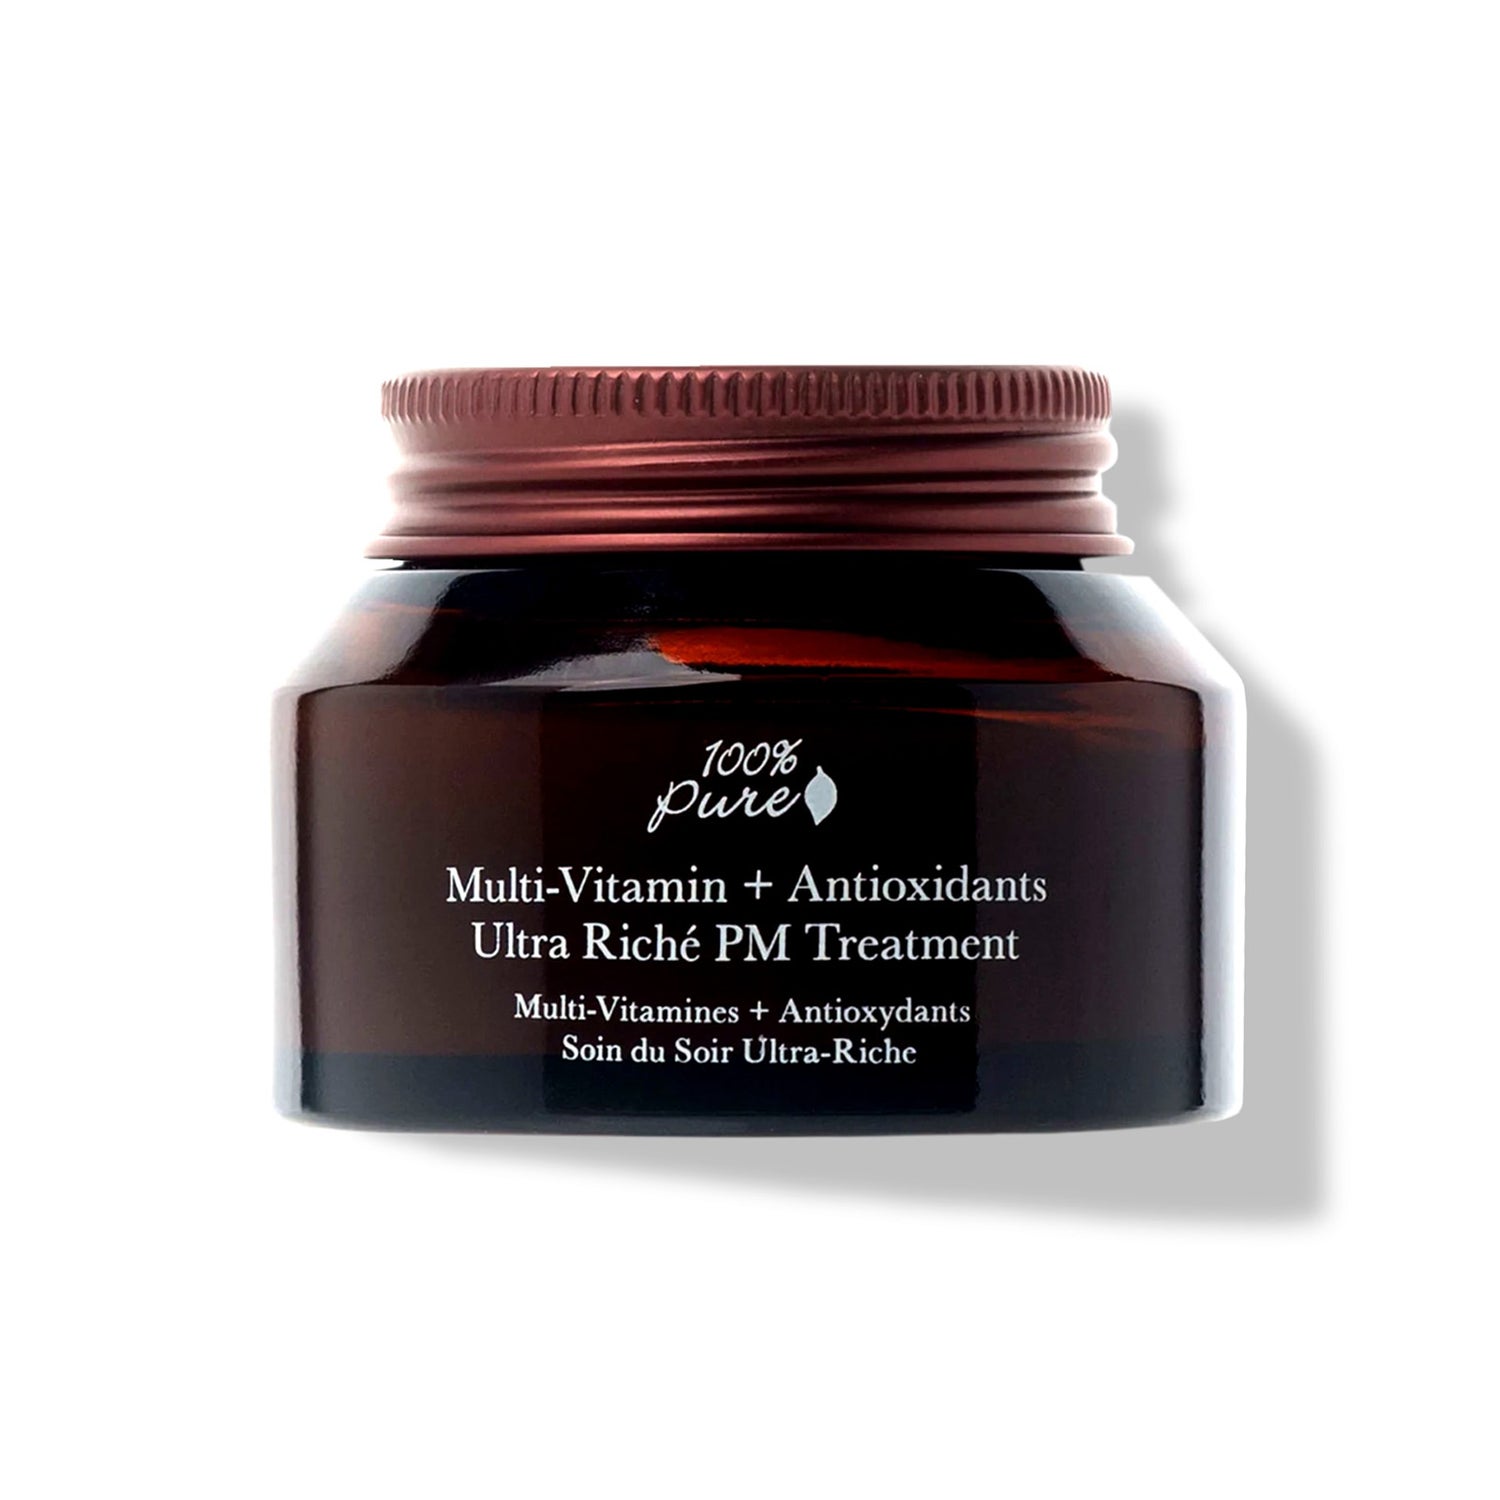 Multi-Vitamin + Antioxidants Ultra Riche PM Treatment 42.5 g